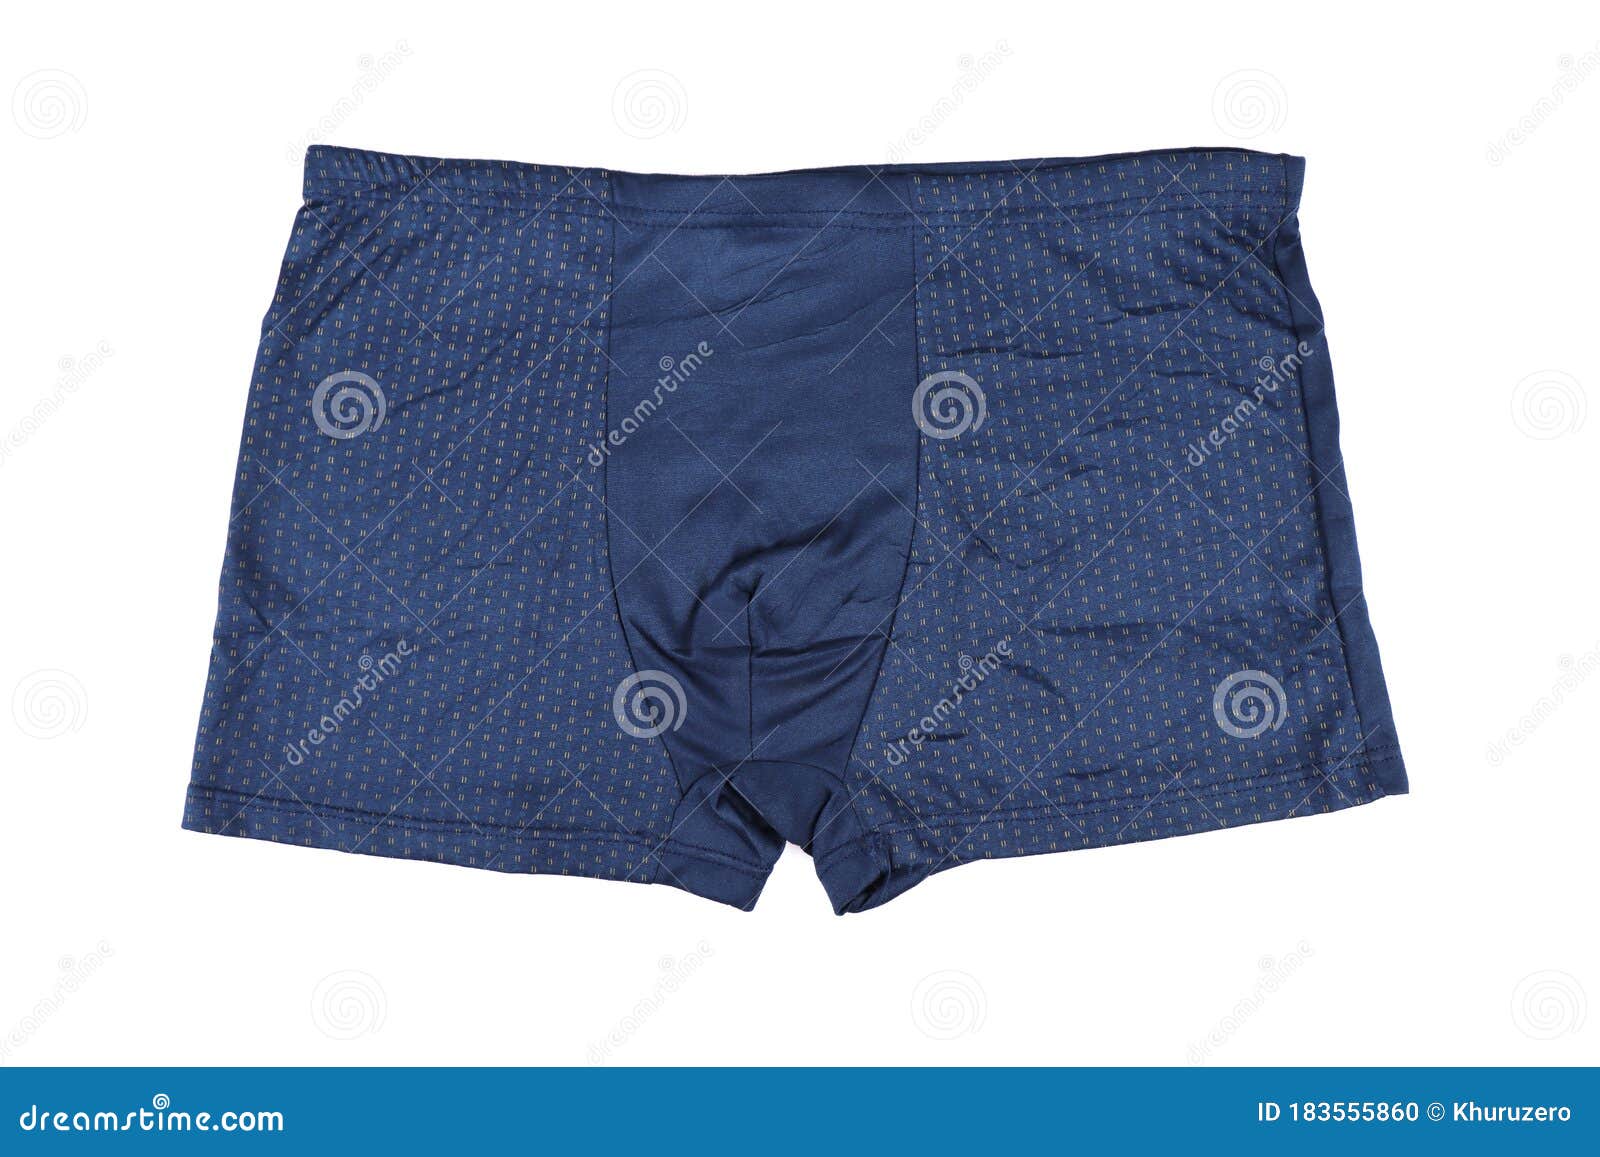 Men Underwear Isolated on White Stock Photo - Image of comfortable ...